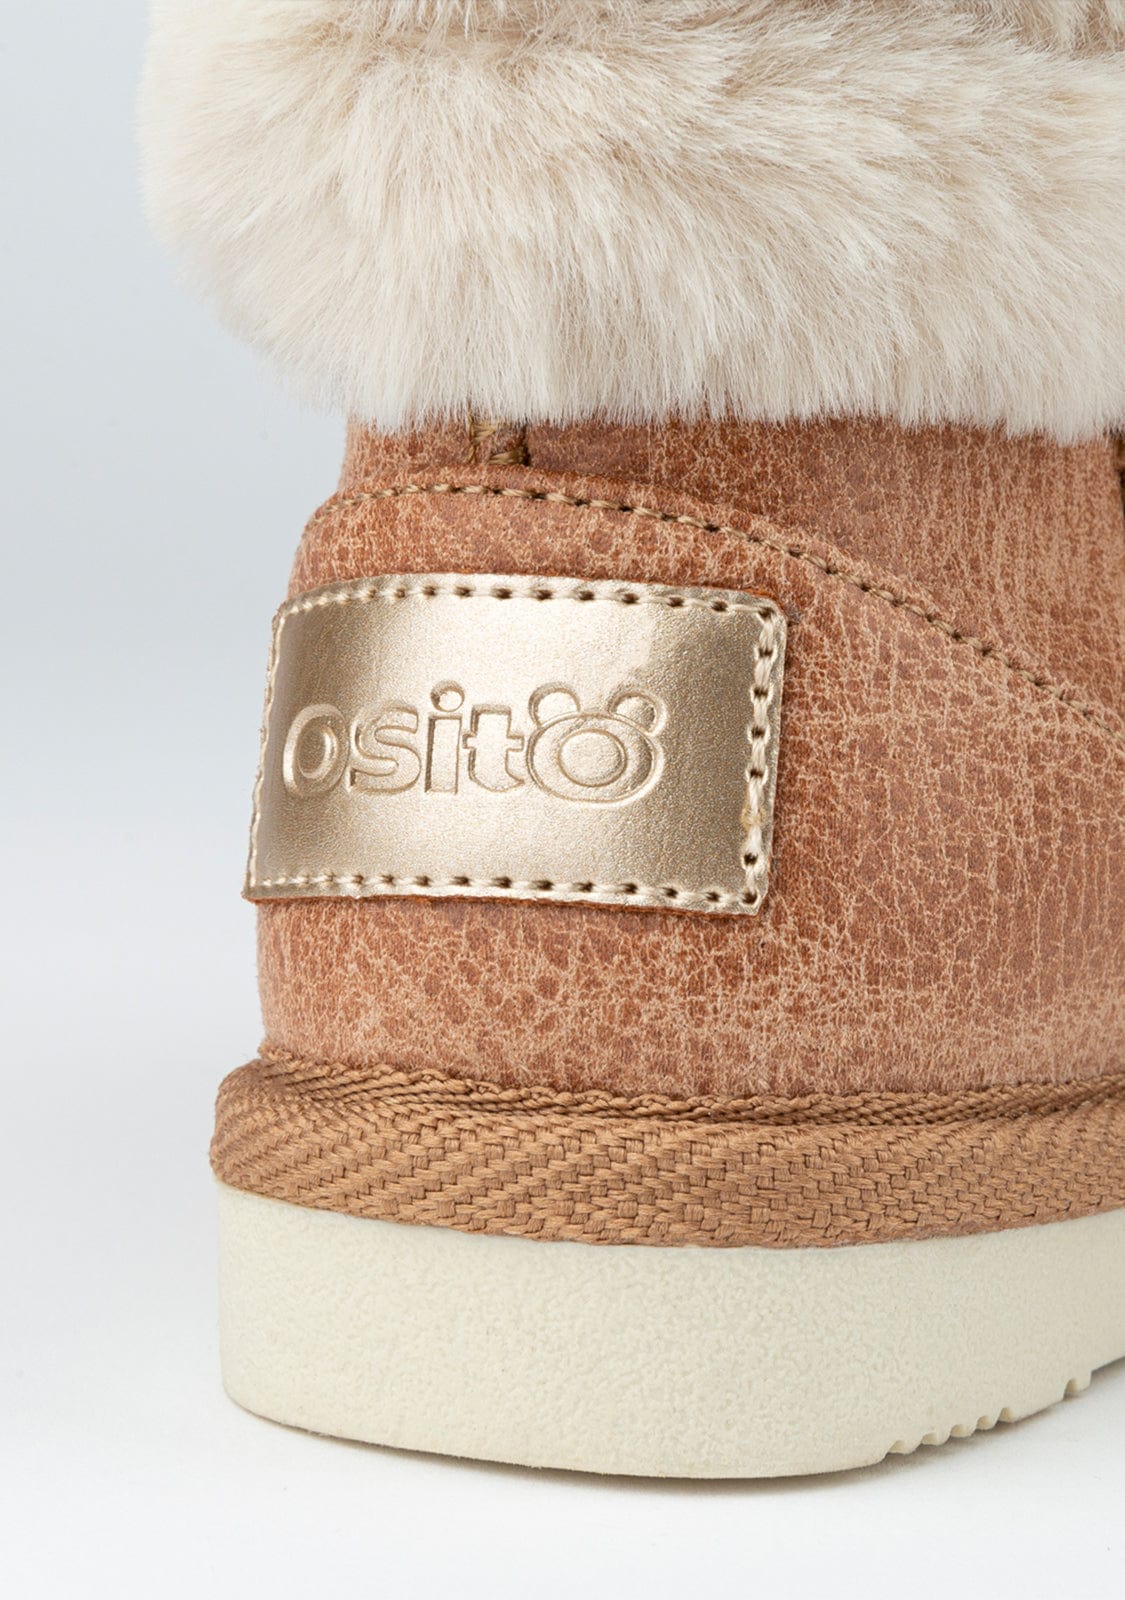 OSITO Shoes Baby's Camel Aviator Fur Australian Boots